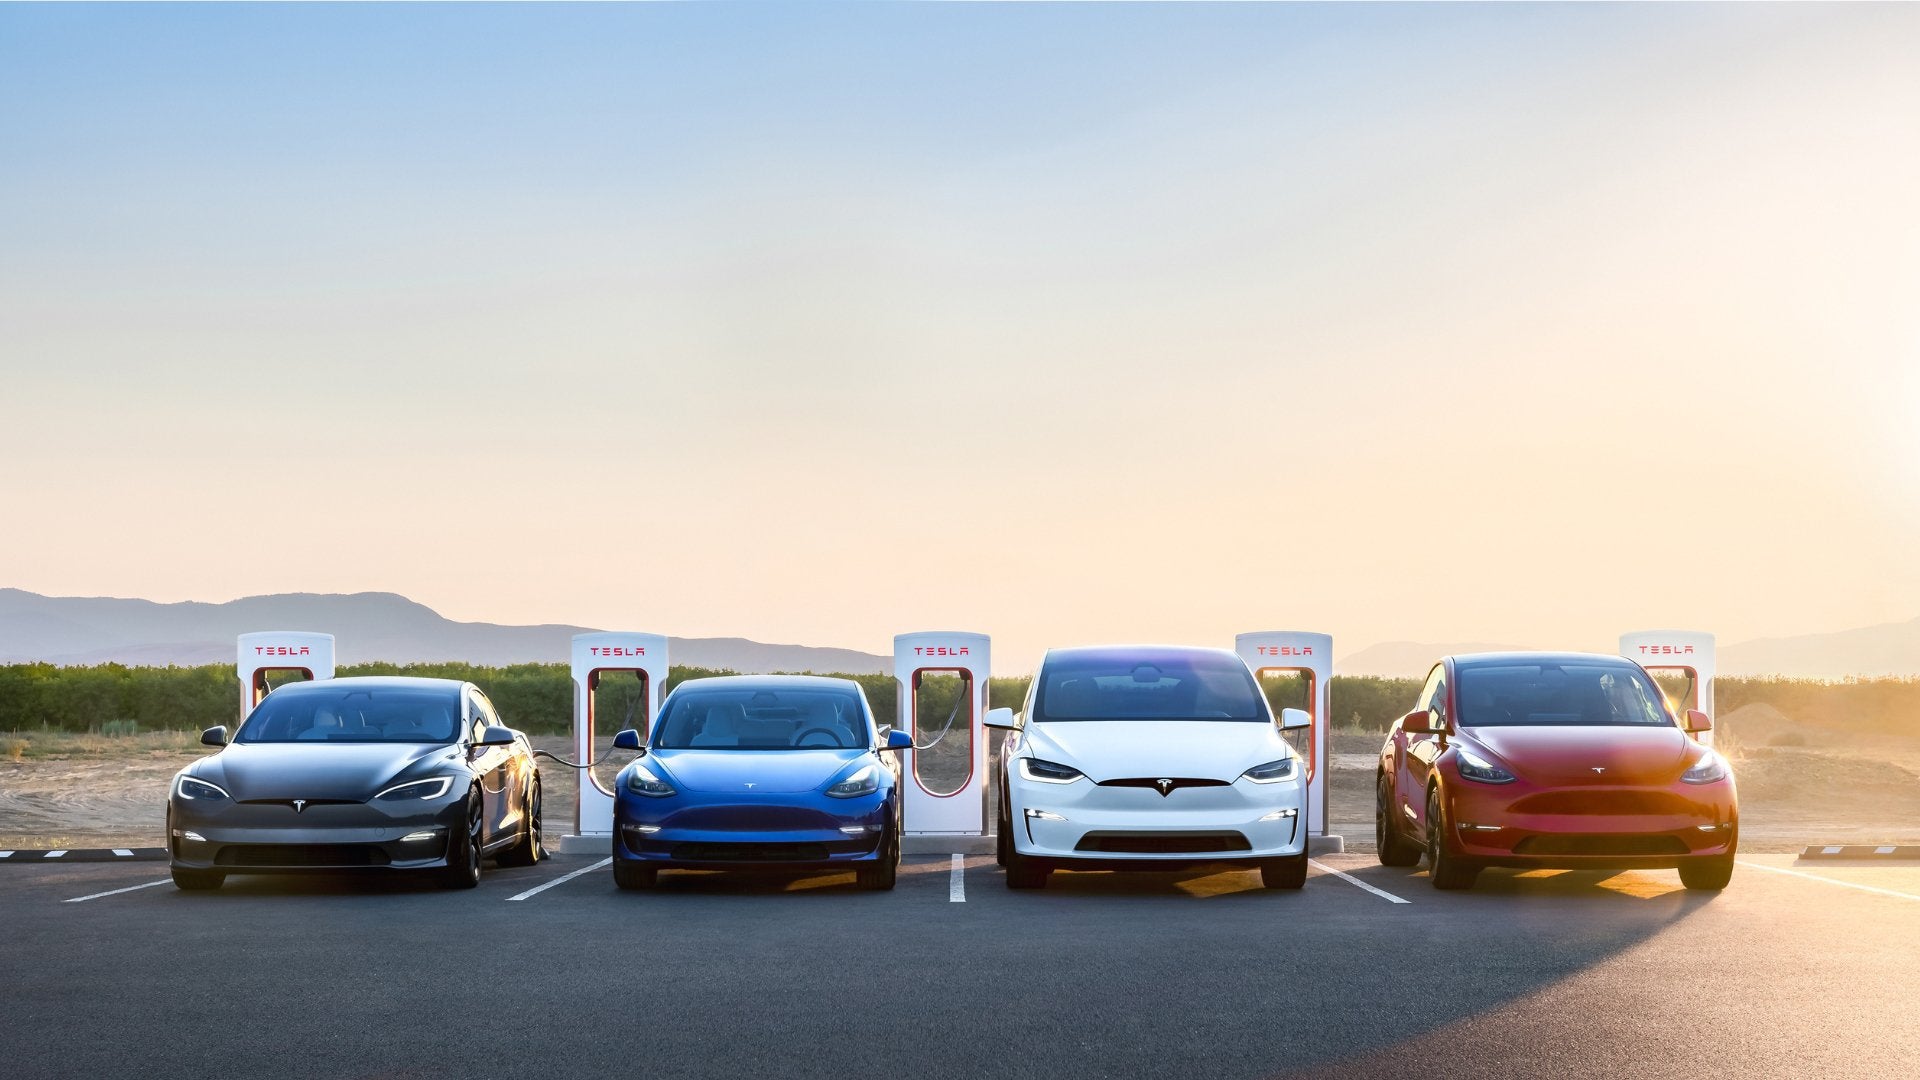 Tesla Quartalsergebnis - Tesla hat im 3. Quartal 435.059 Fahrzeuge ausgeliefert! - Shop4Tesla